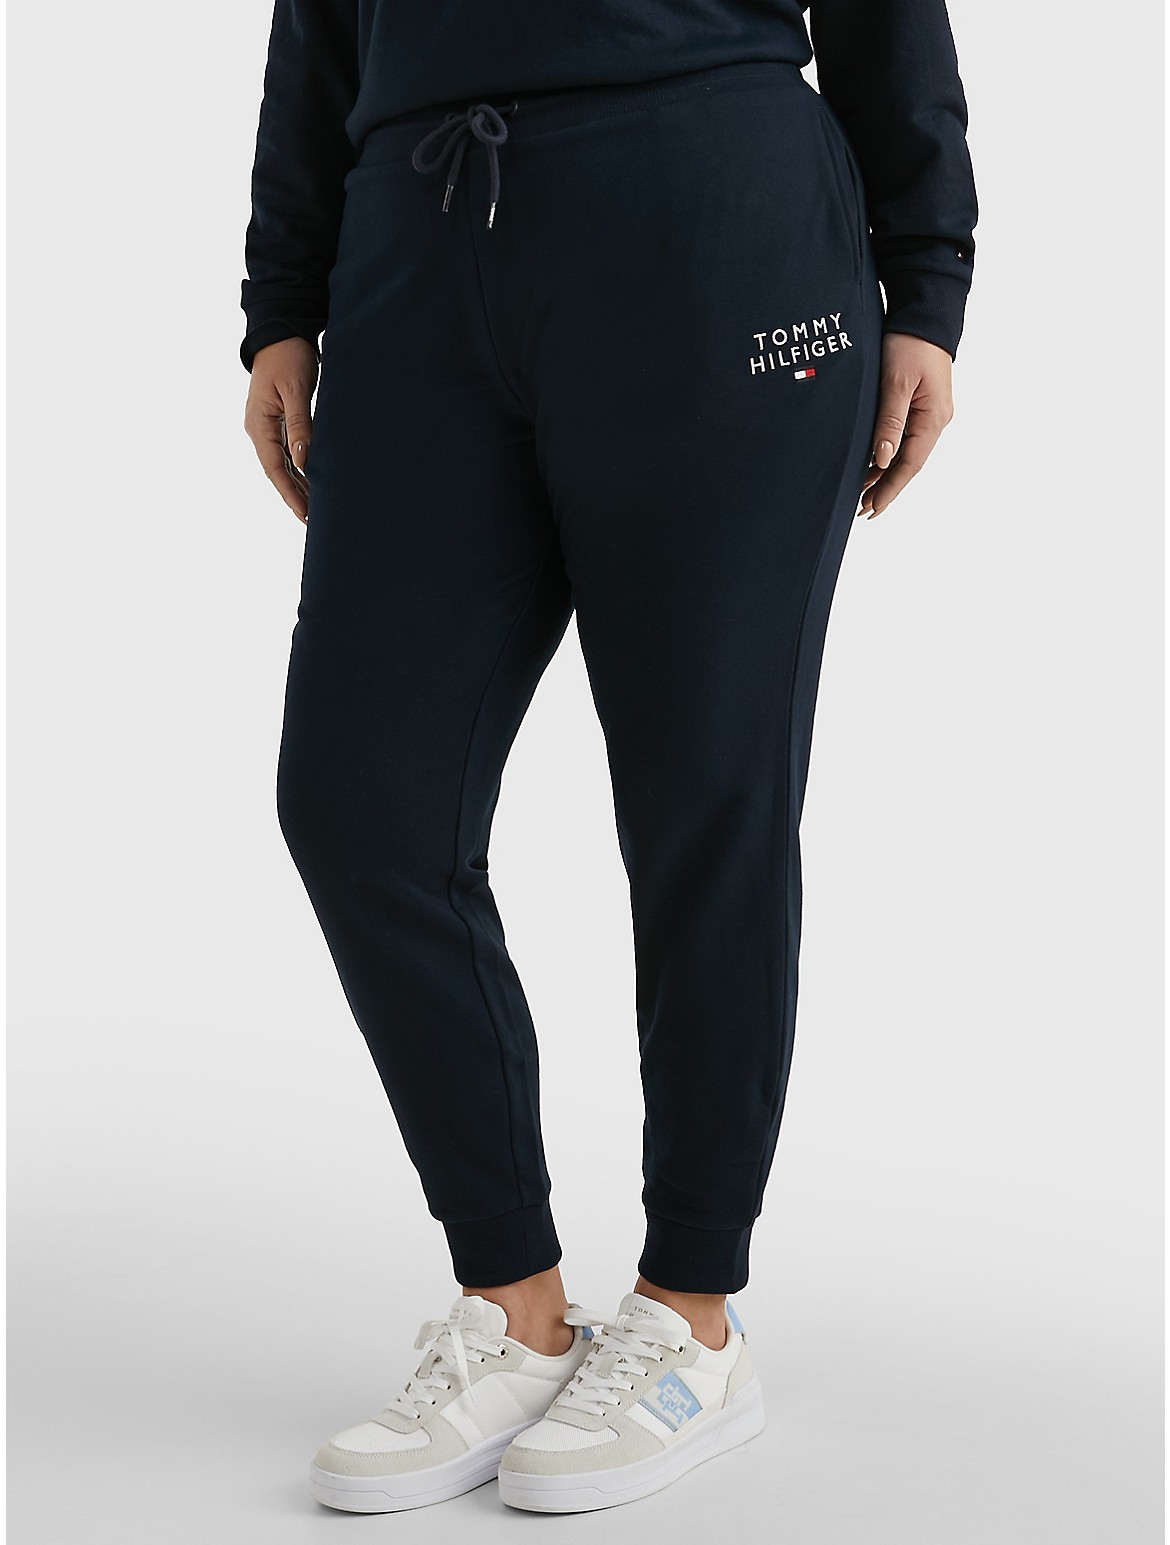 Lids Seattle Seahawks Tommy Hilfiger Women's Zoey Raglan Pullover  Sweatshirt & Pants Tri-Blend Lounge Set - Cream